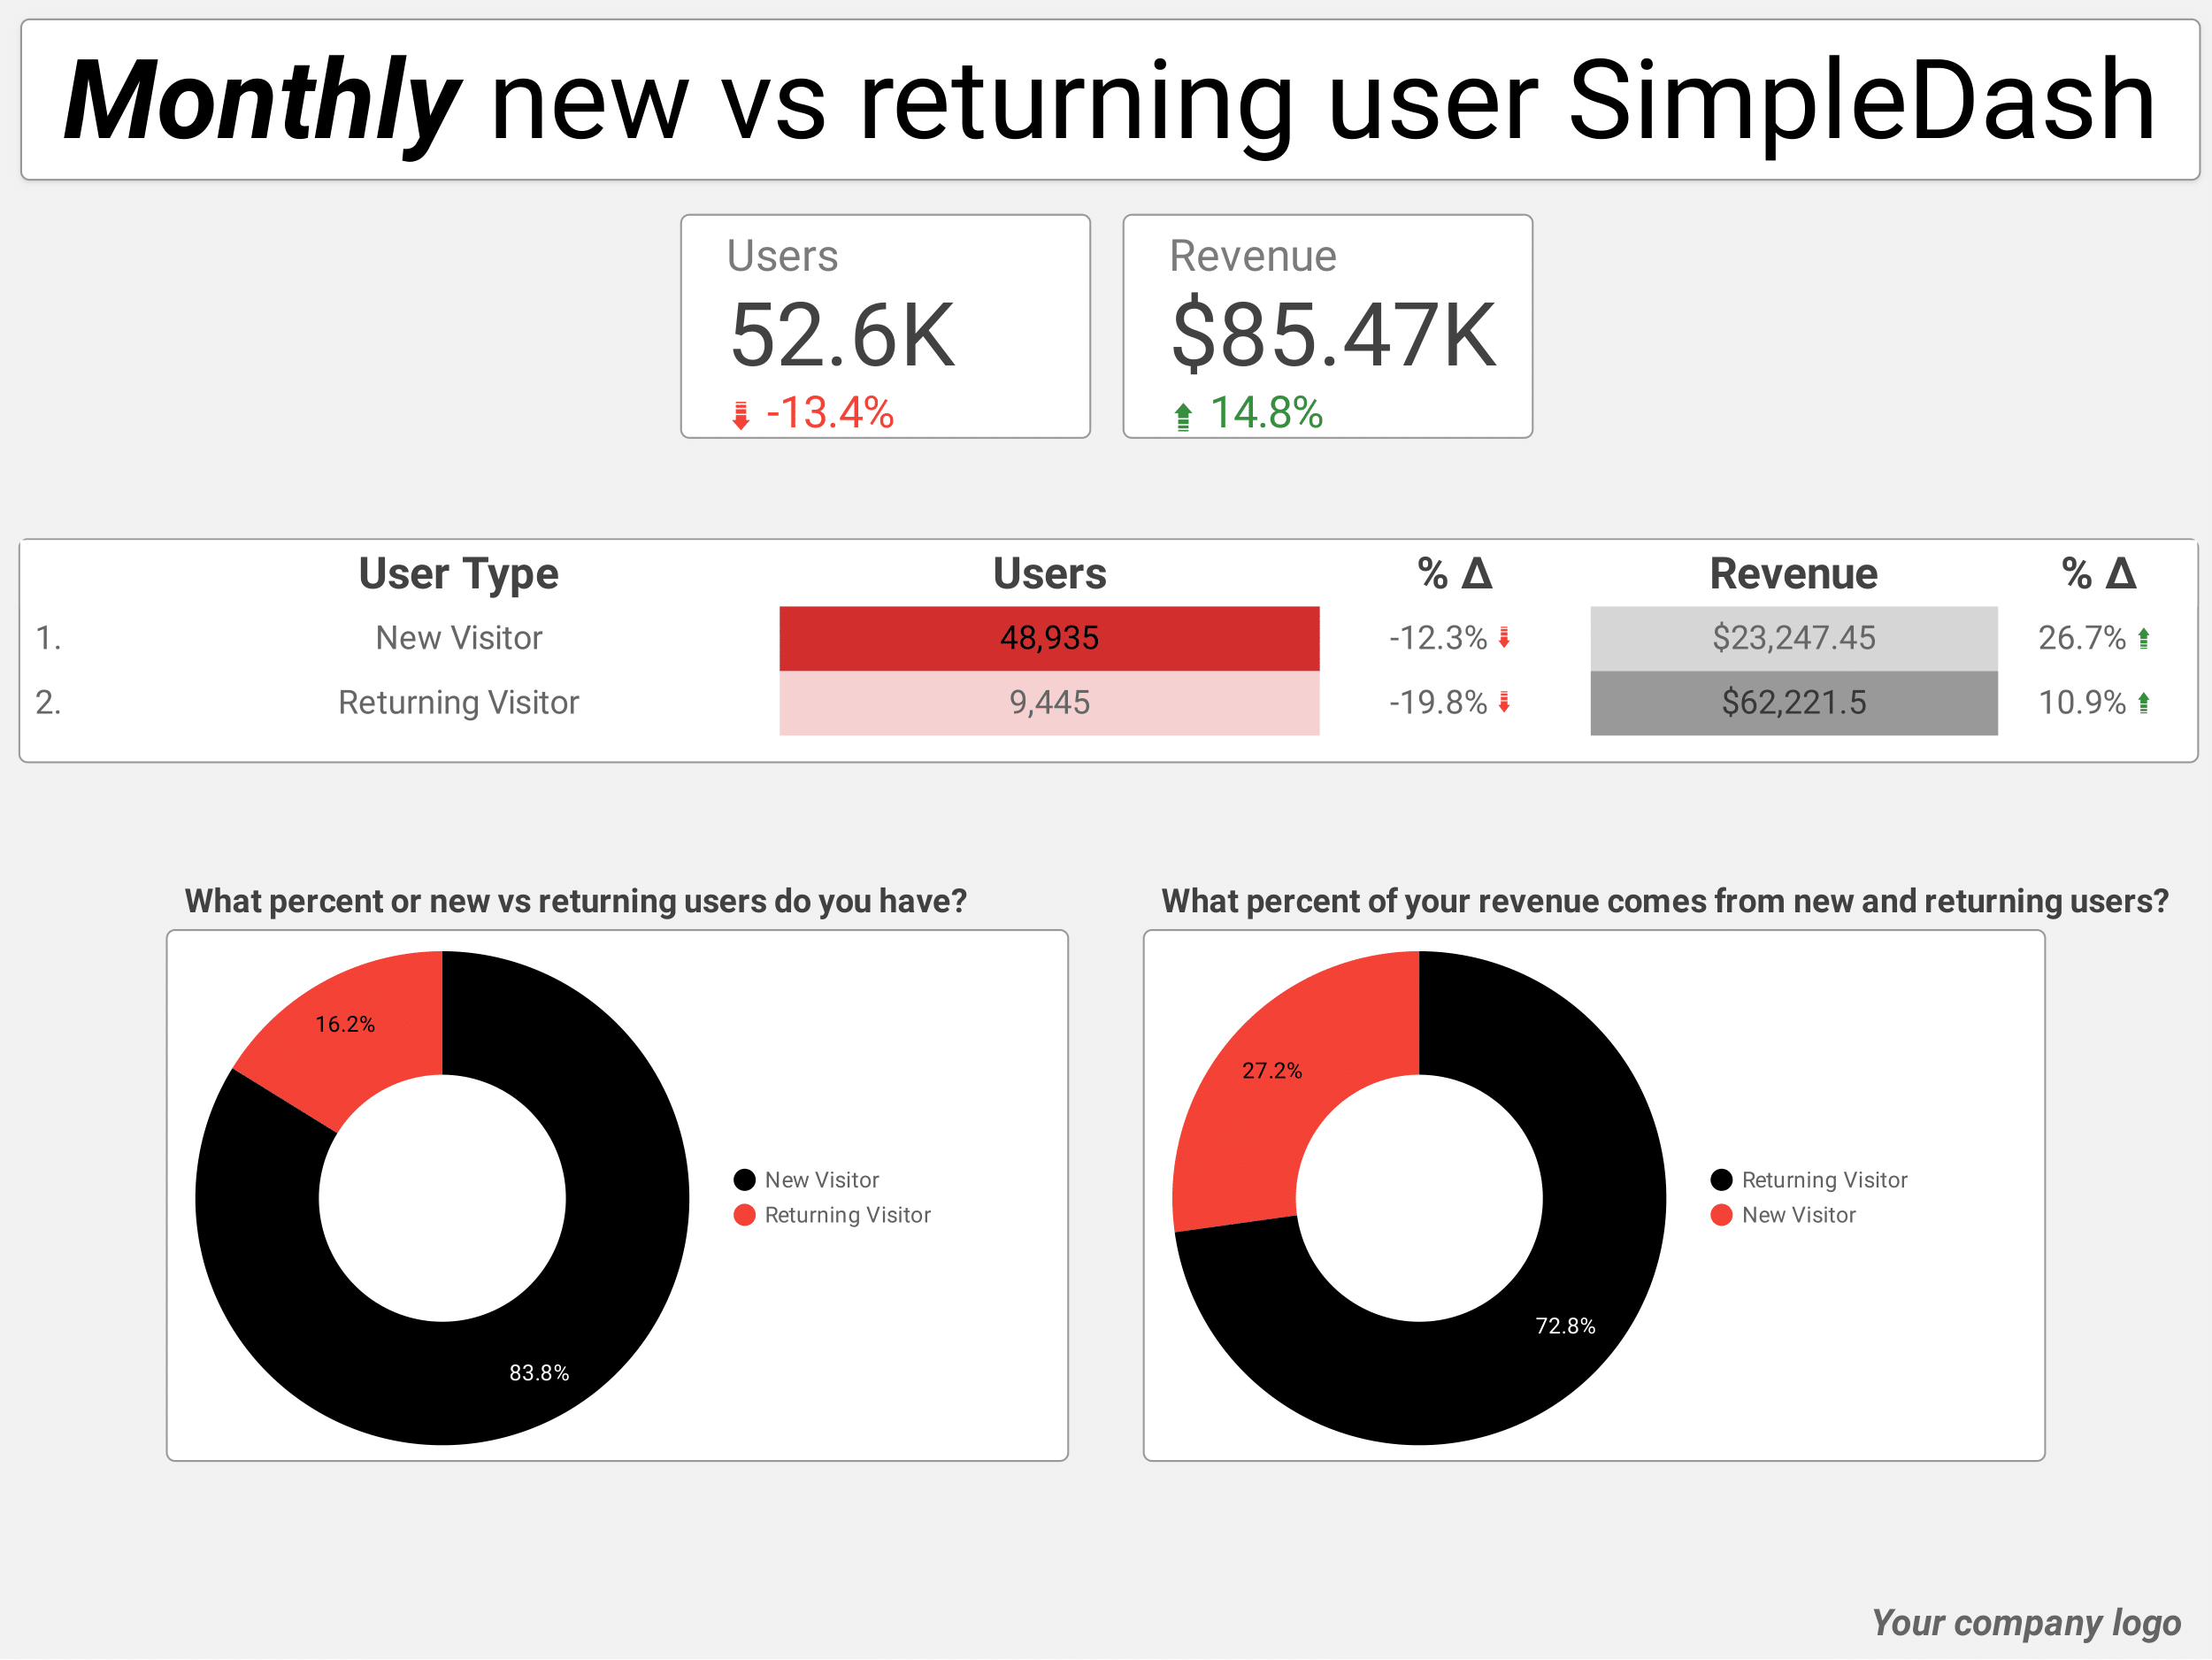 DST_E-commerce_SimpleDash_monthly_new-vs-returning-user-1.png